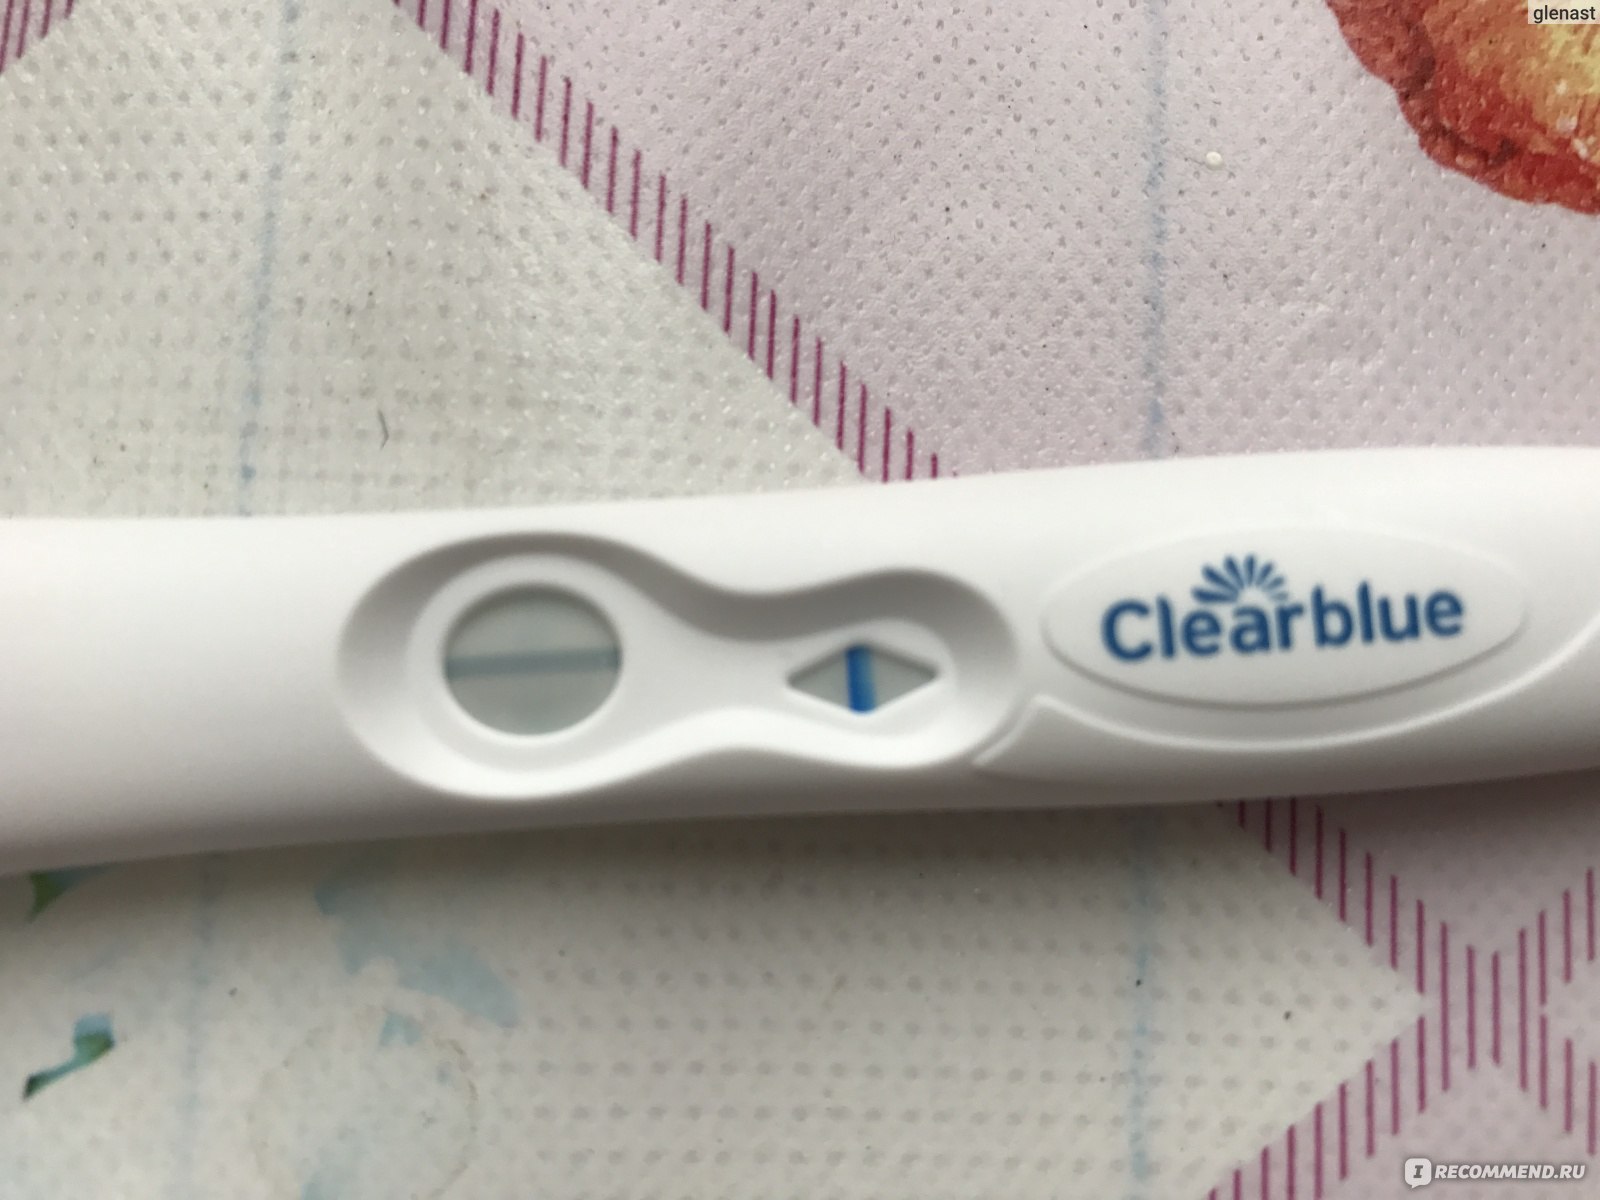 Тест на беременность Clearblue